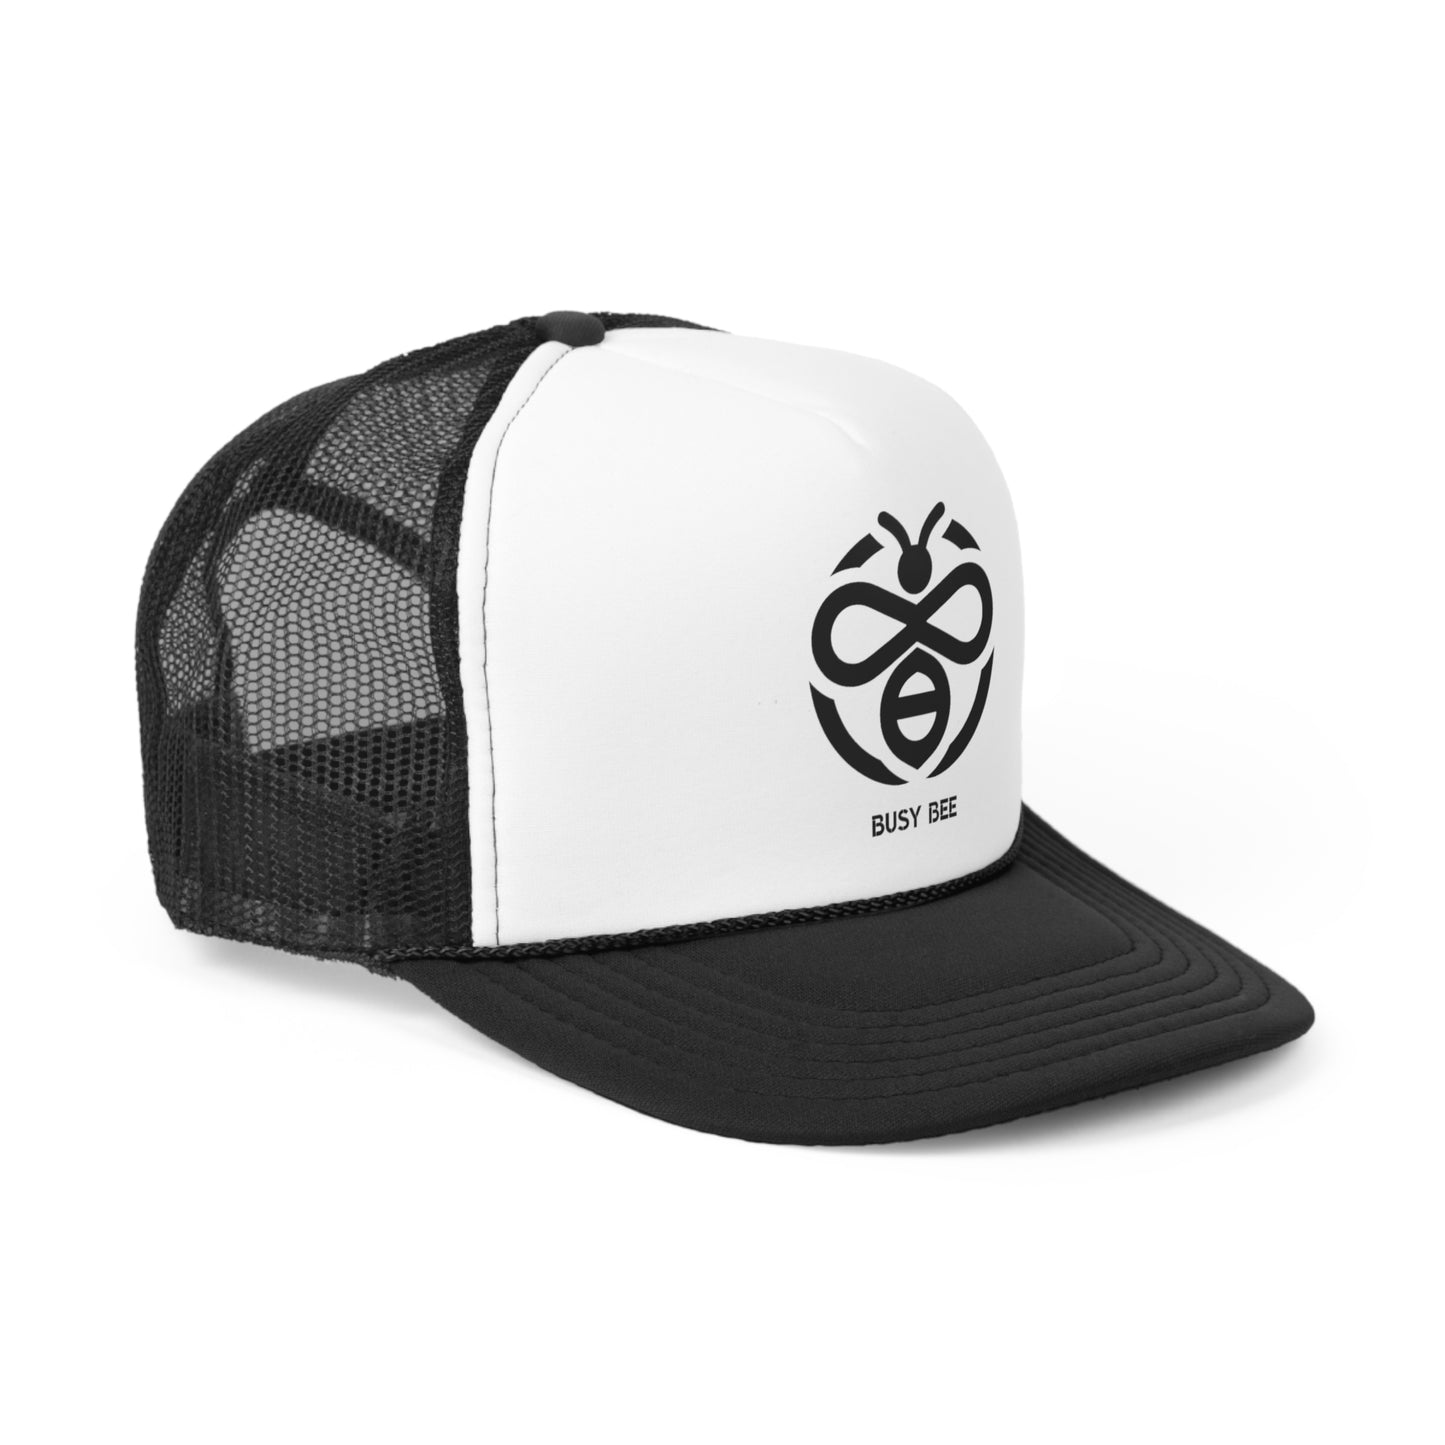 Busy Bee - Black logo Trucker Caps